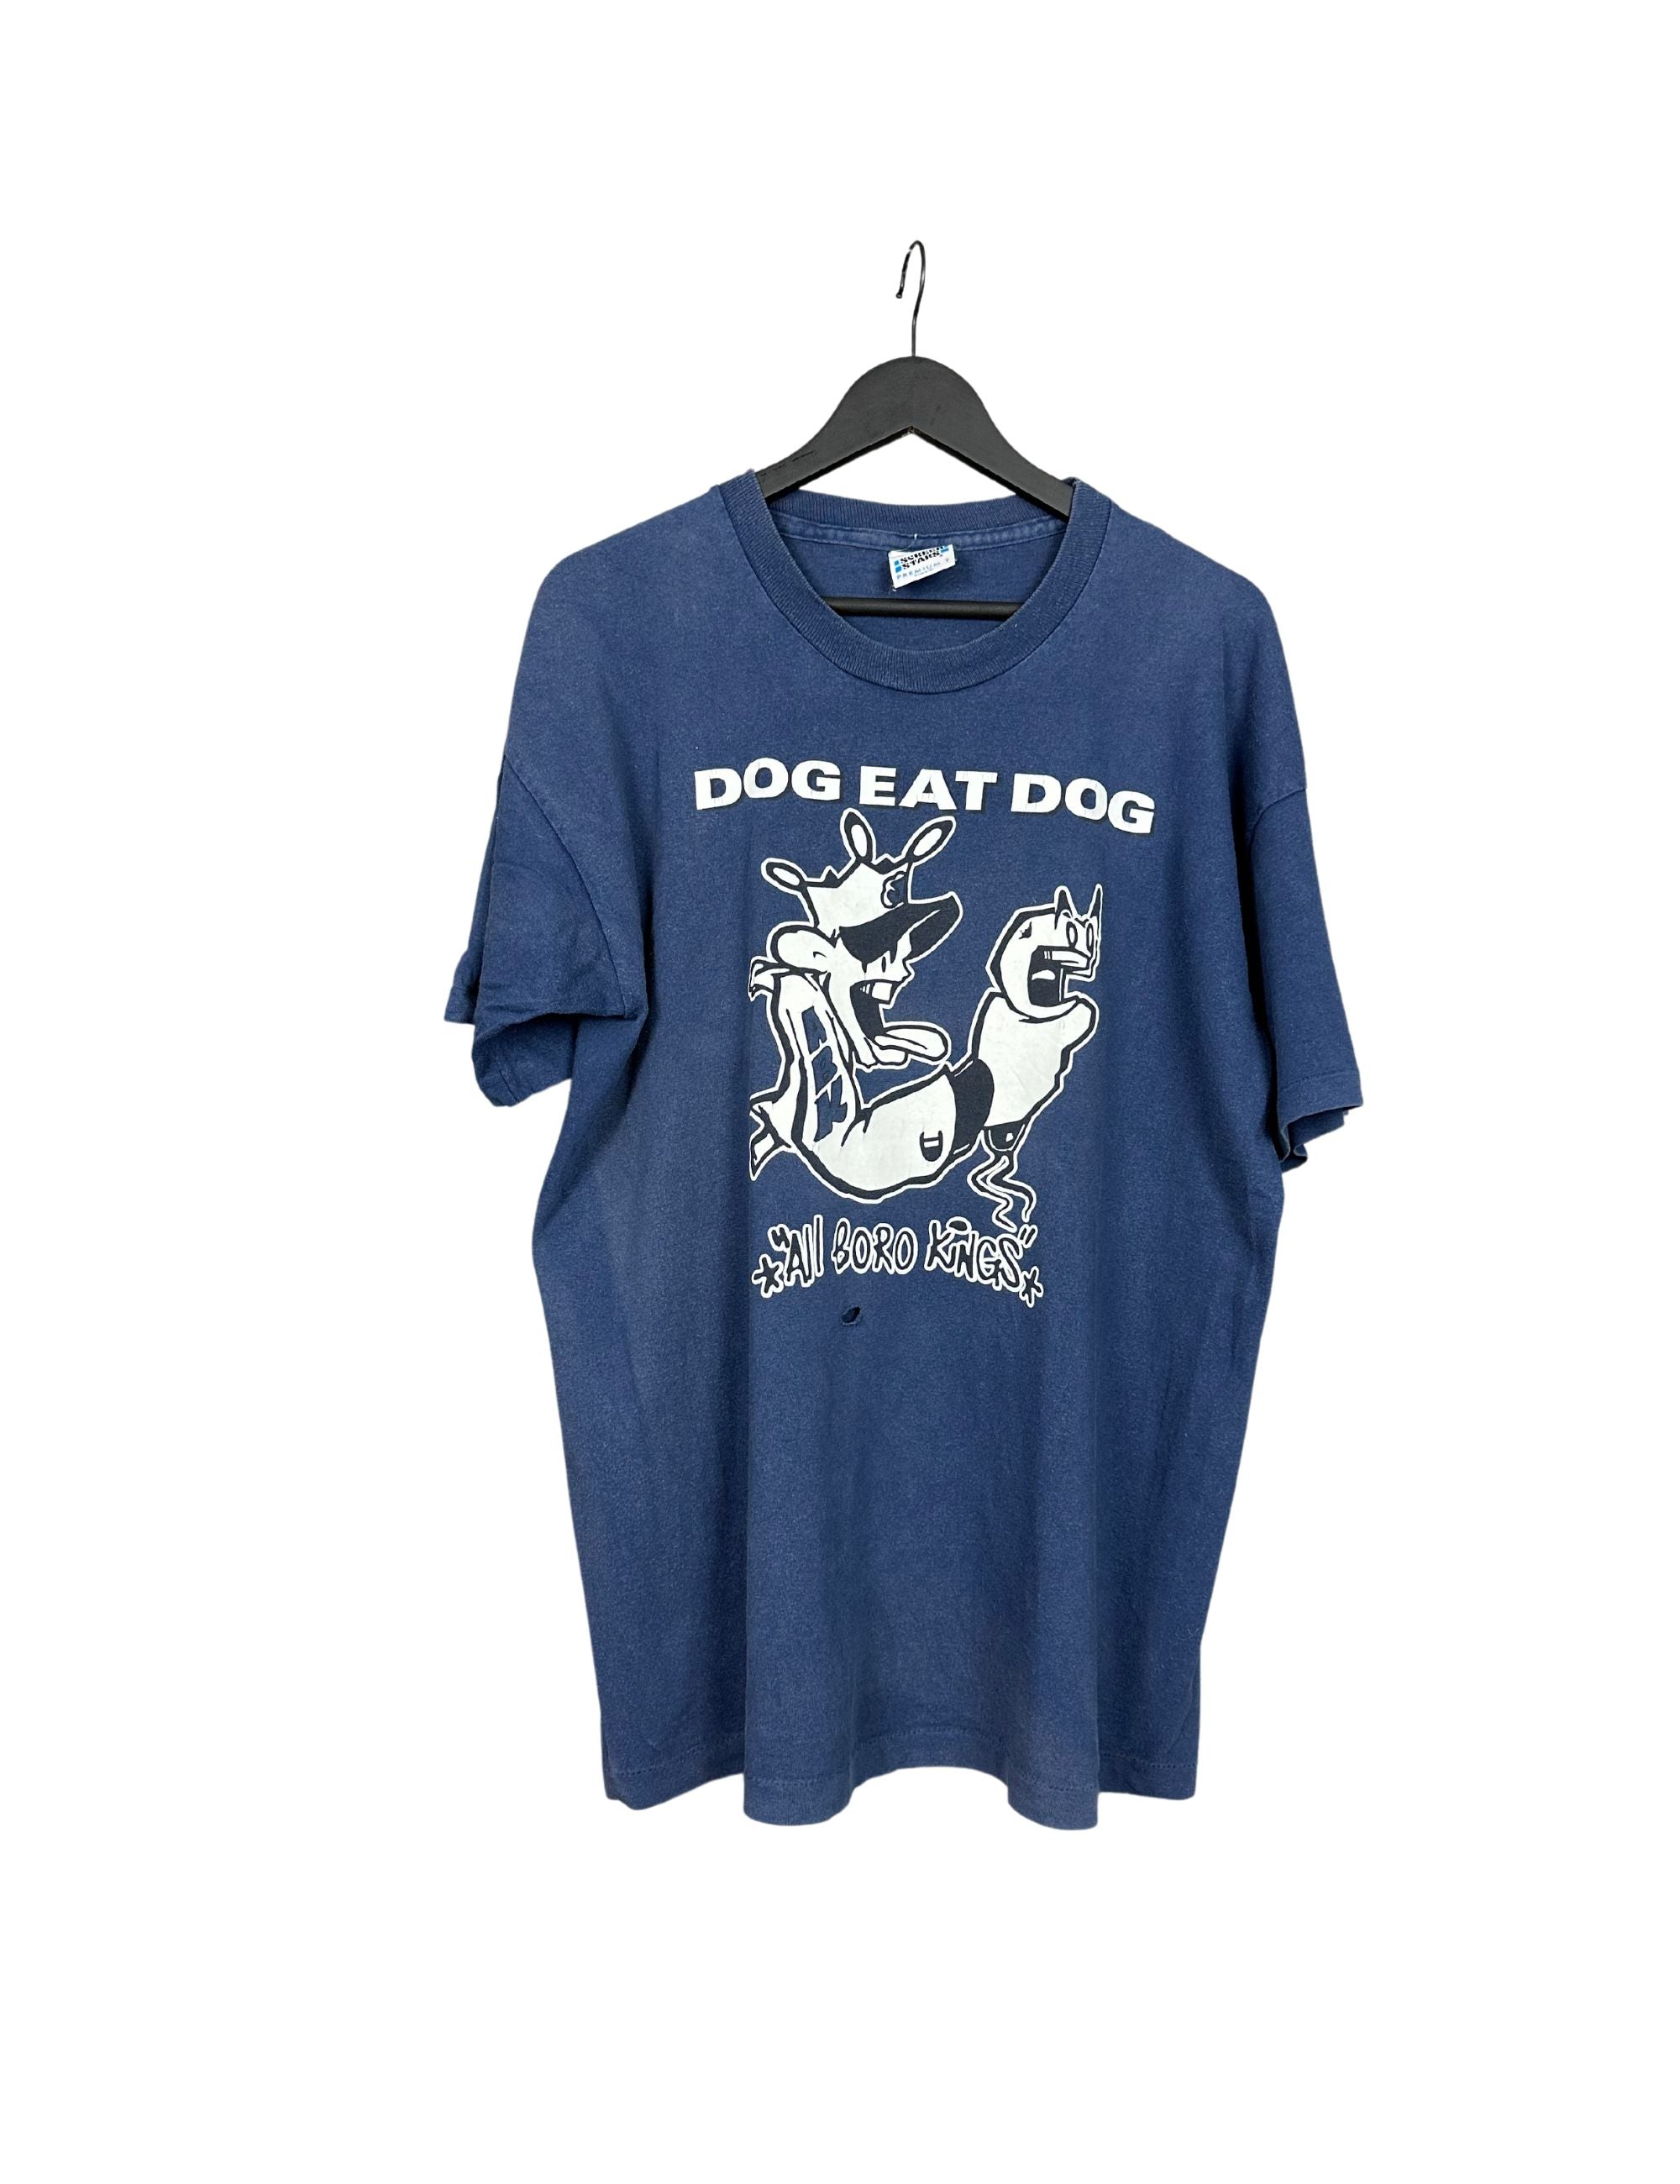 Dog Eat Dog 1995 Vintage T-Shirt